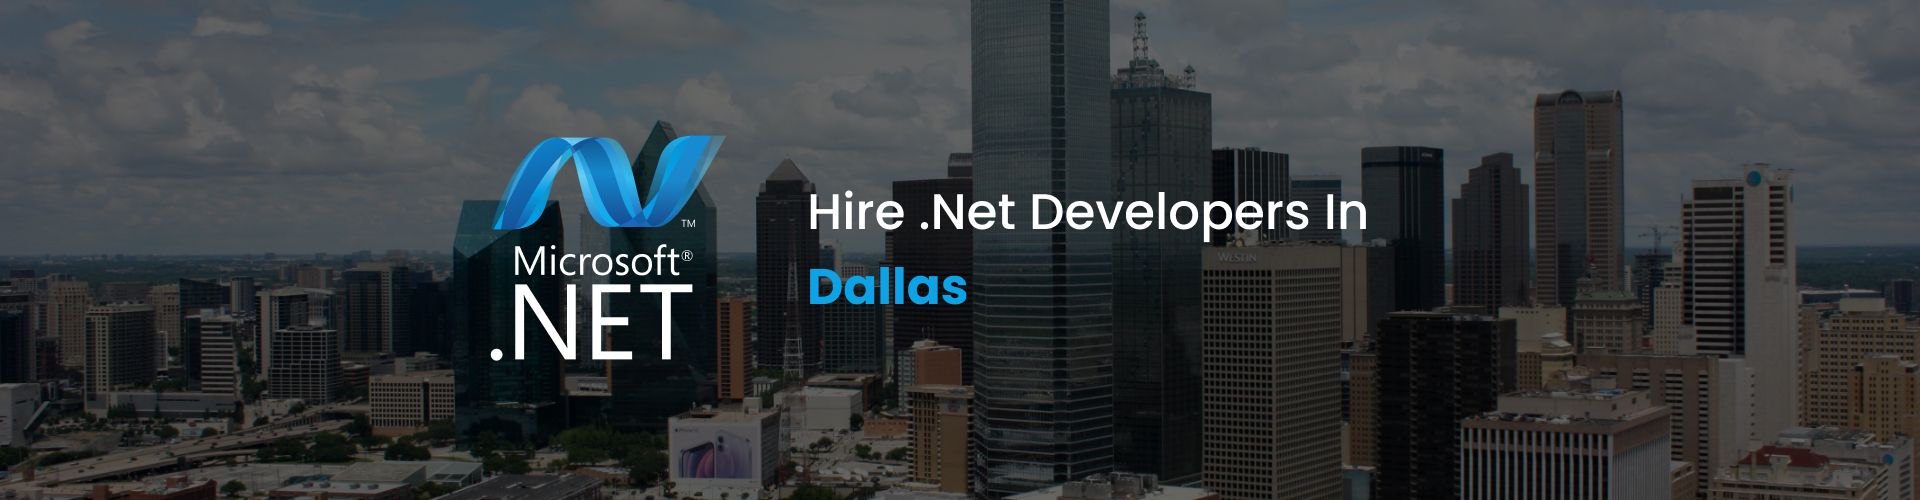 hire .net developers in dallas